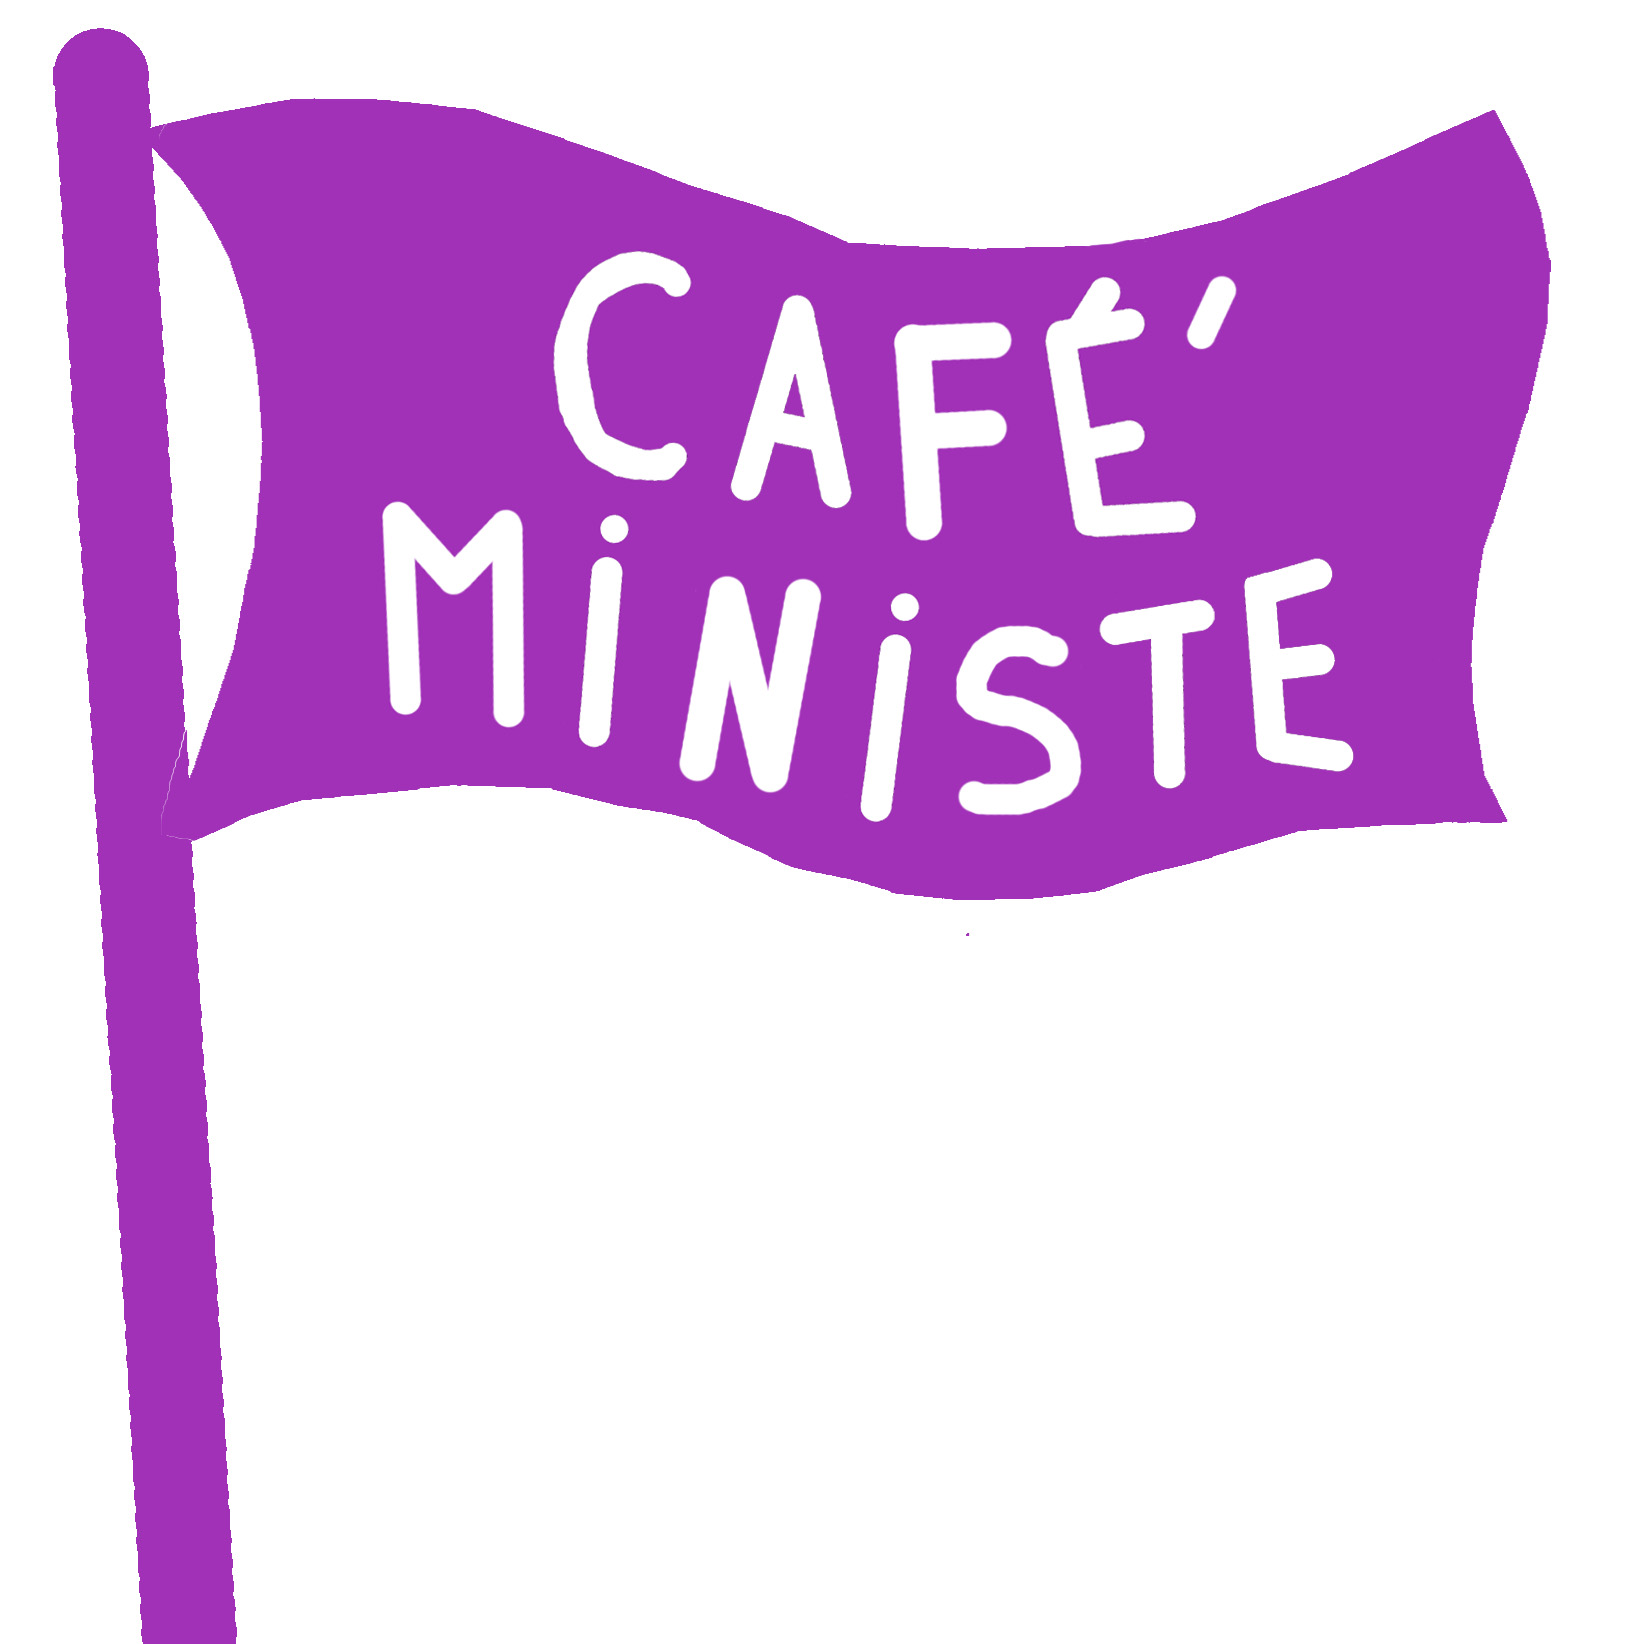 cafe_feministe_drapeau_carre